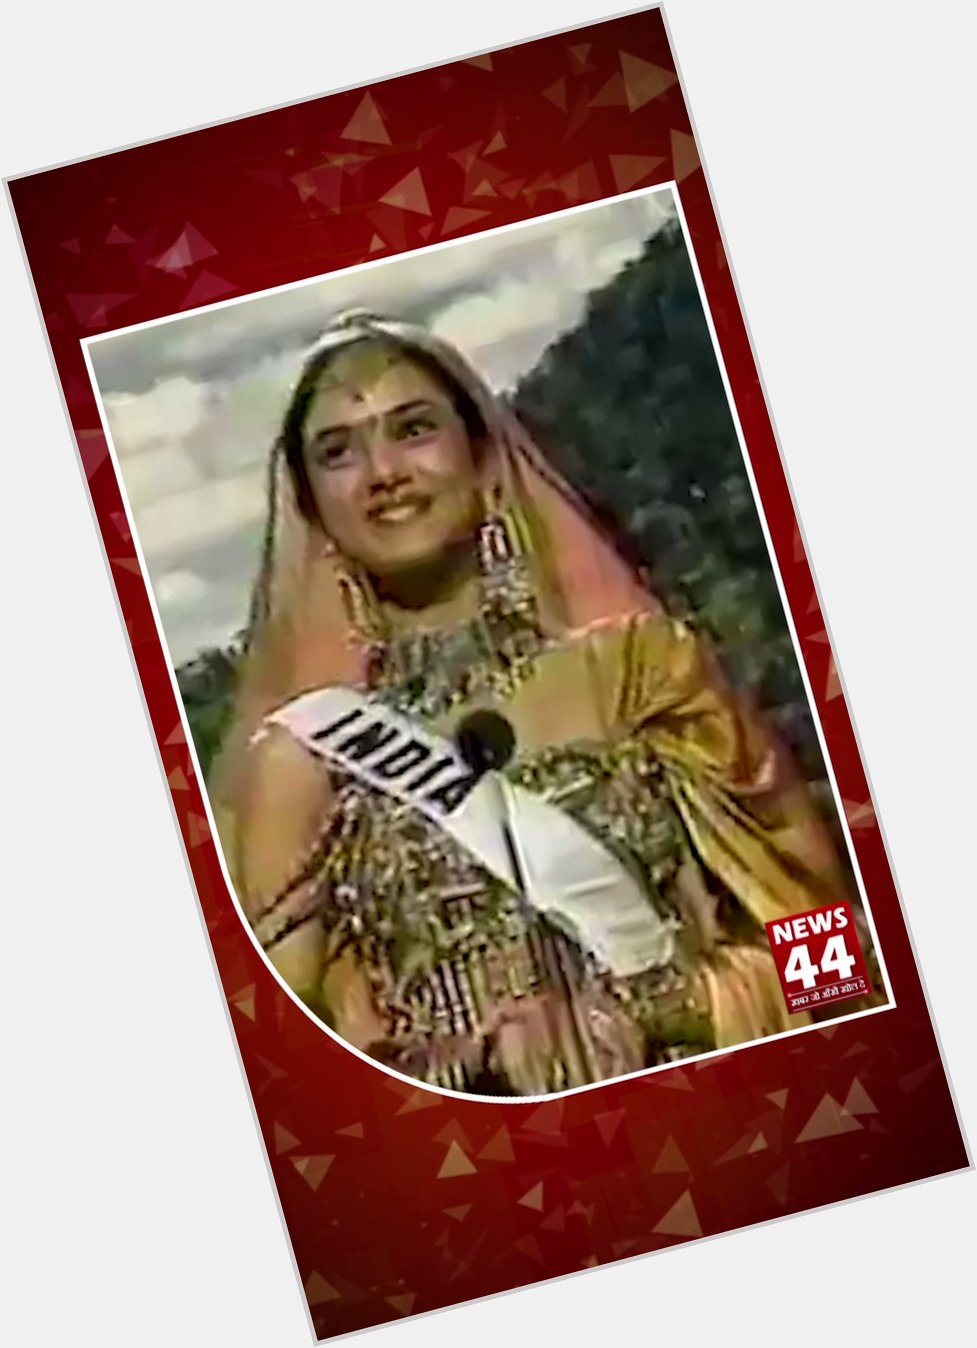 Happy Birthday Sushmita Sen | News44
.
.   